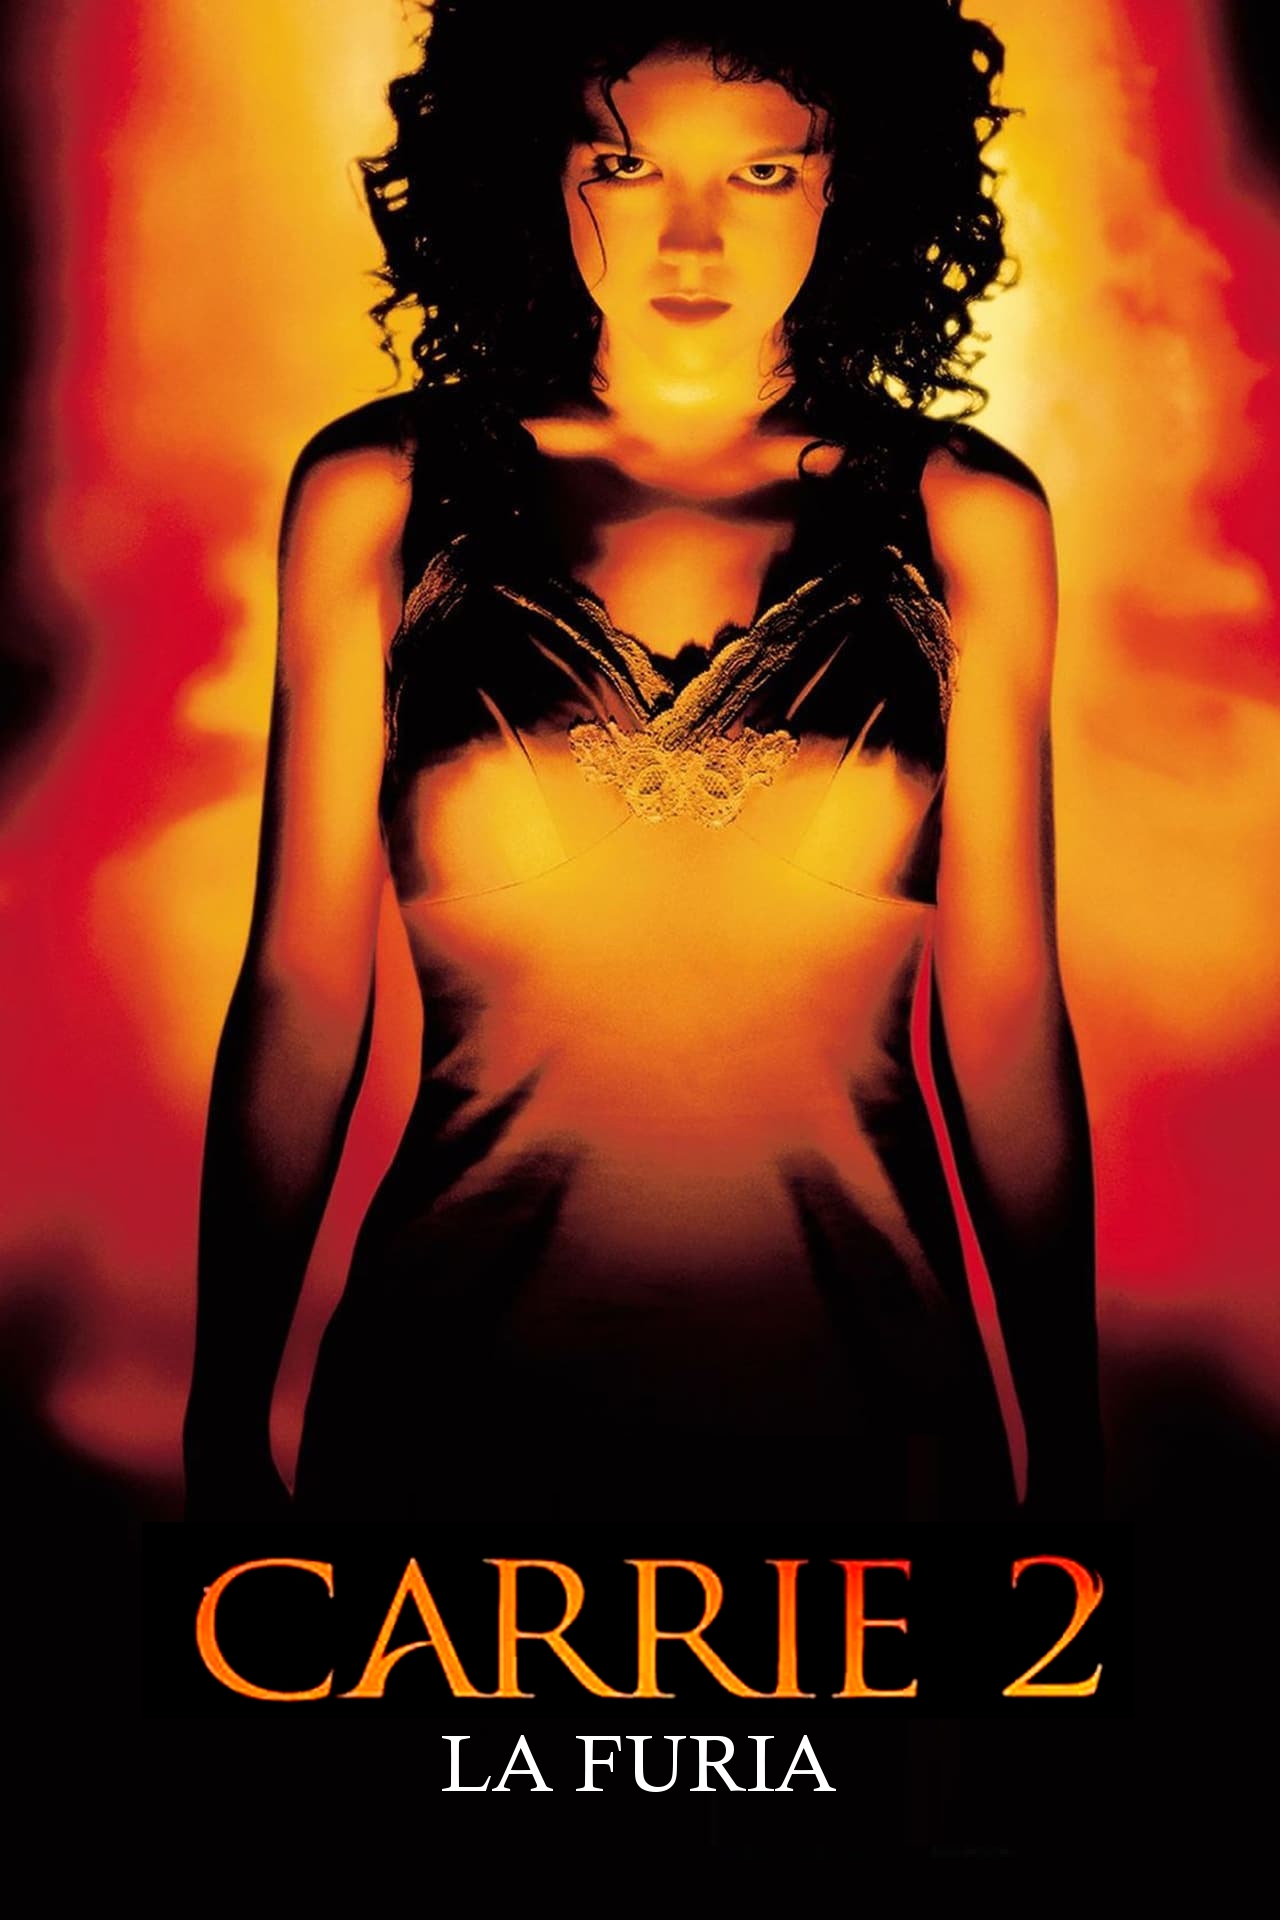 Carrie 2 – La furia [HD] (1999)